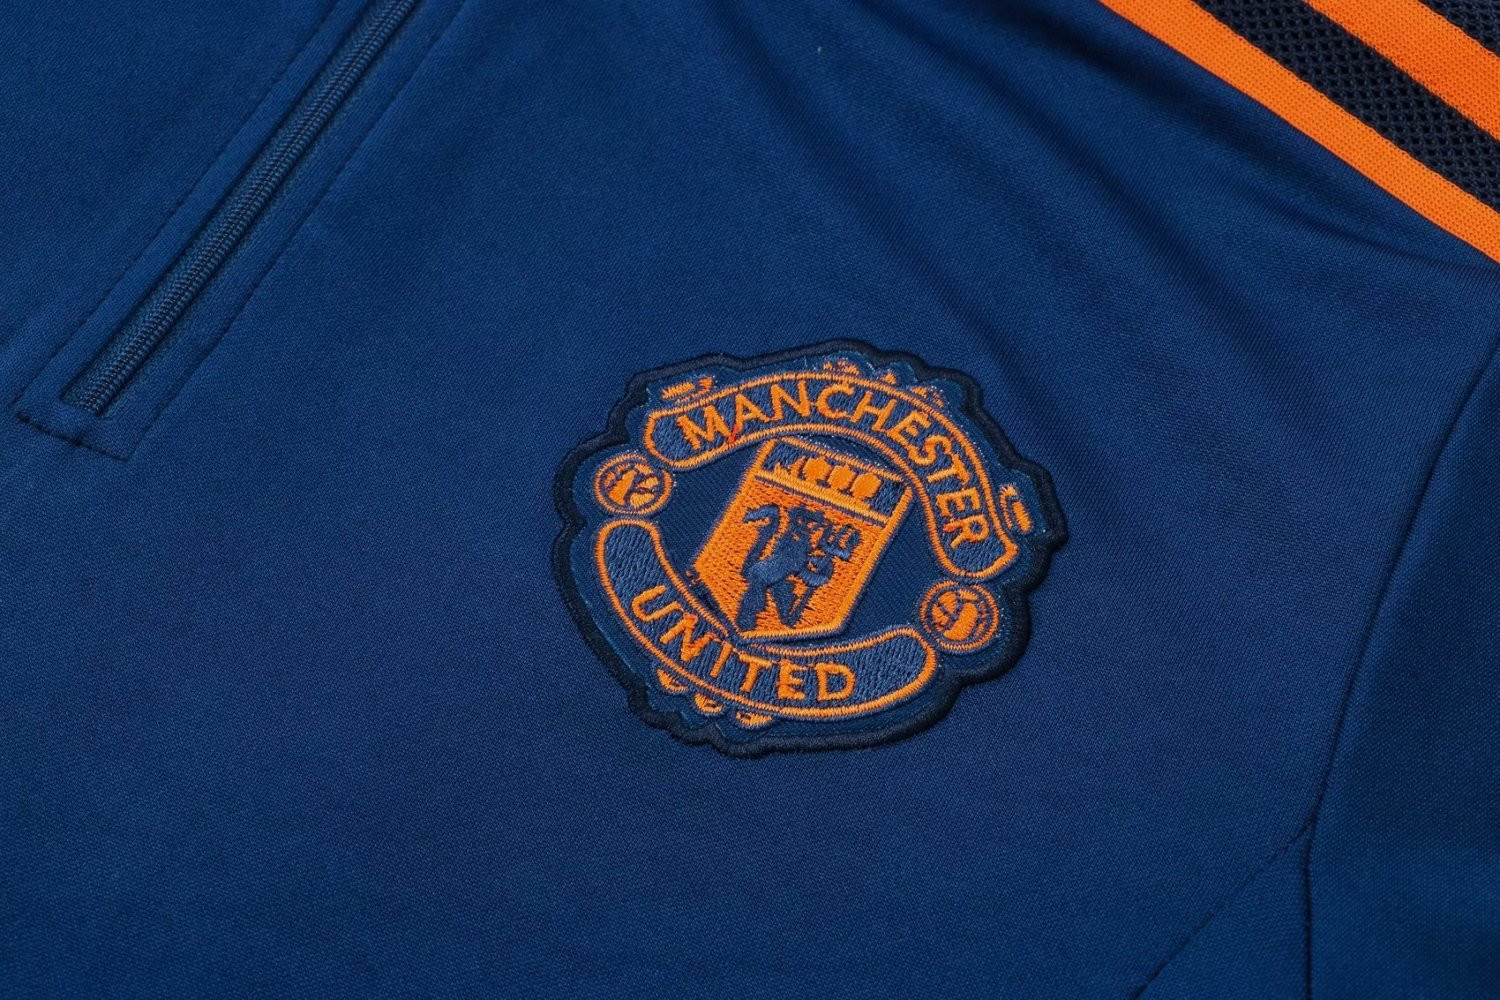 Manchester United Soccer Training Suit Replica Deep Blue 2021/22 Men's